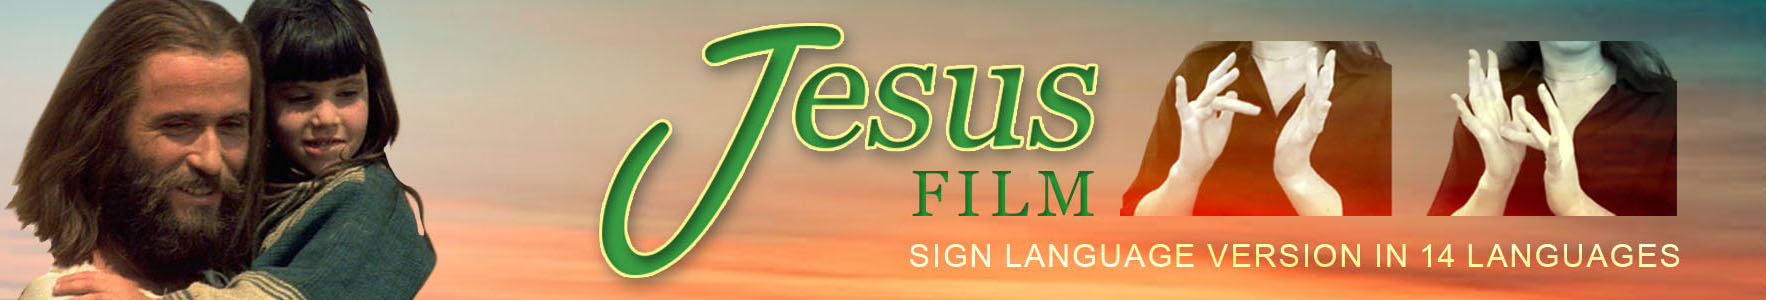 Jesus Film in Sign Language - Online Articles